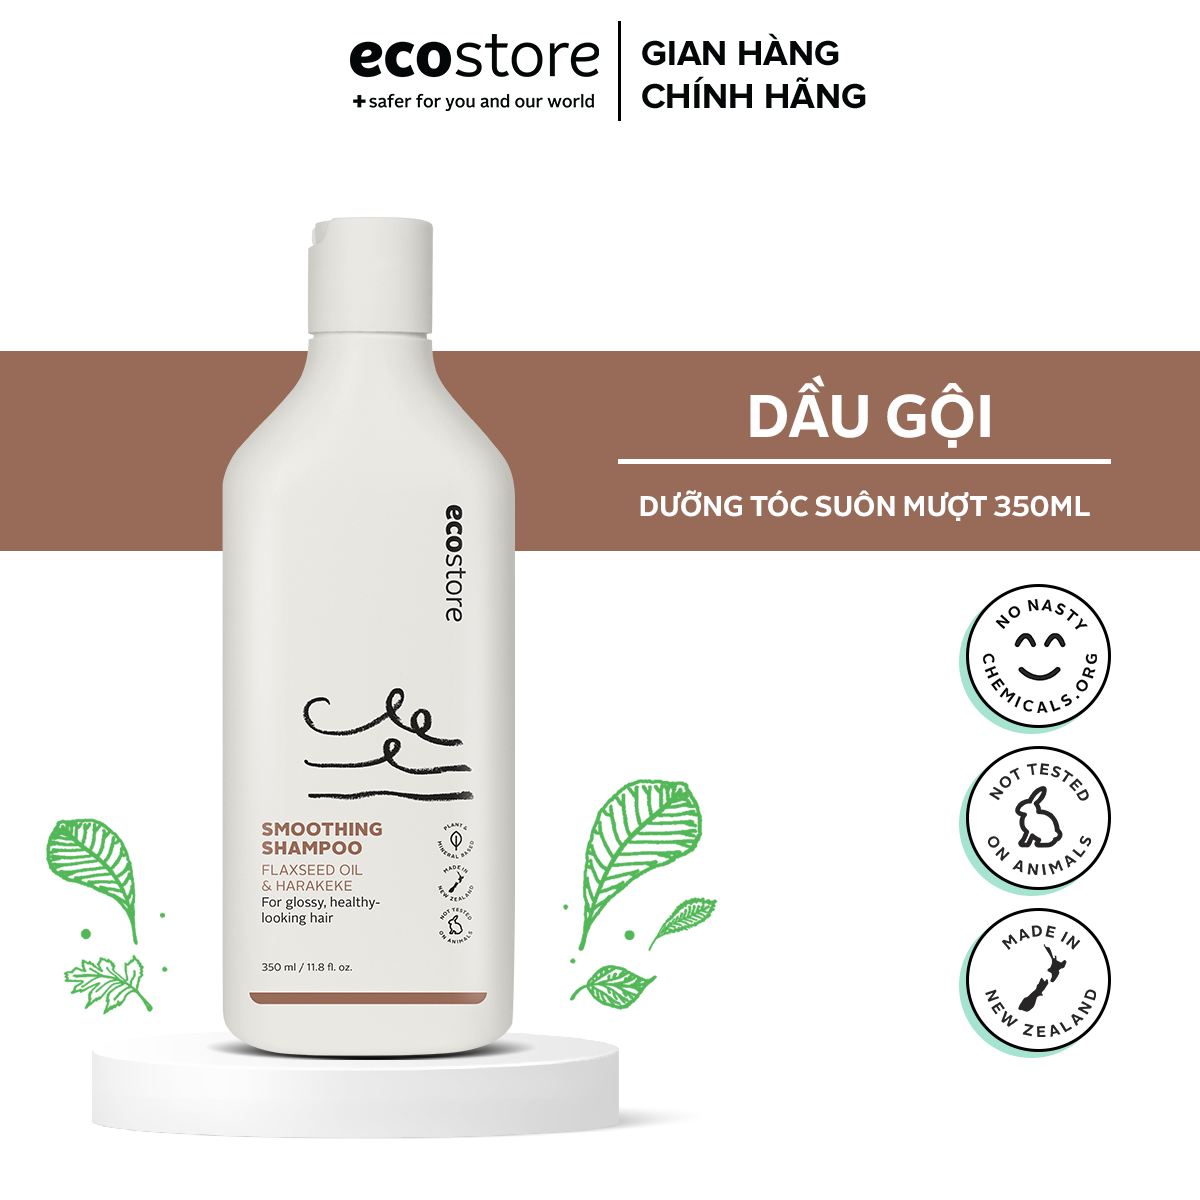 Ecostore plant-based shampoo conditioner 350ml smooth